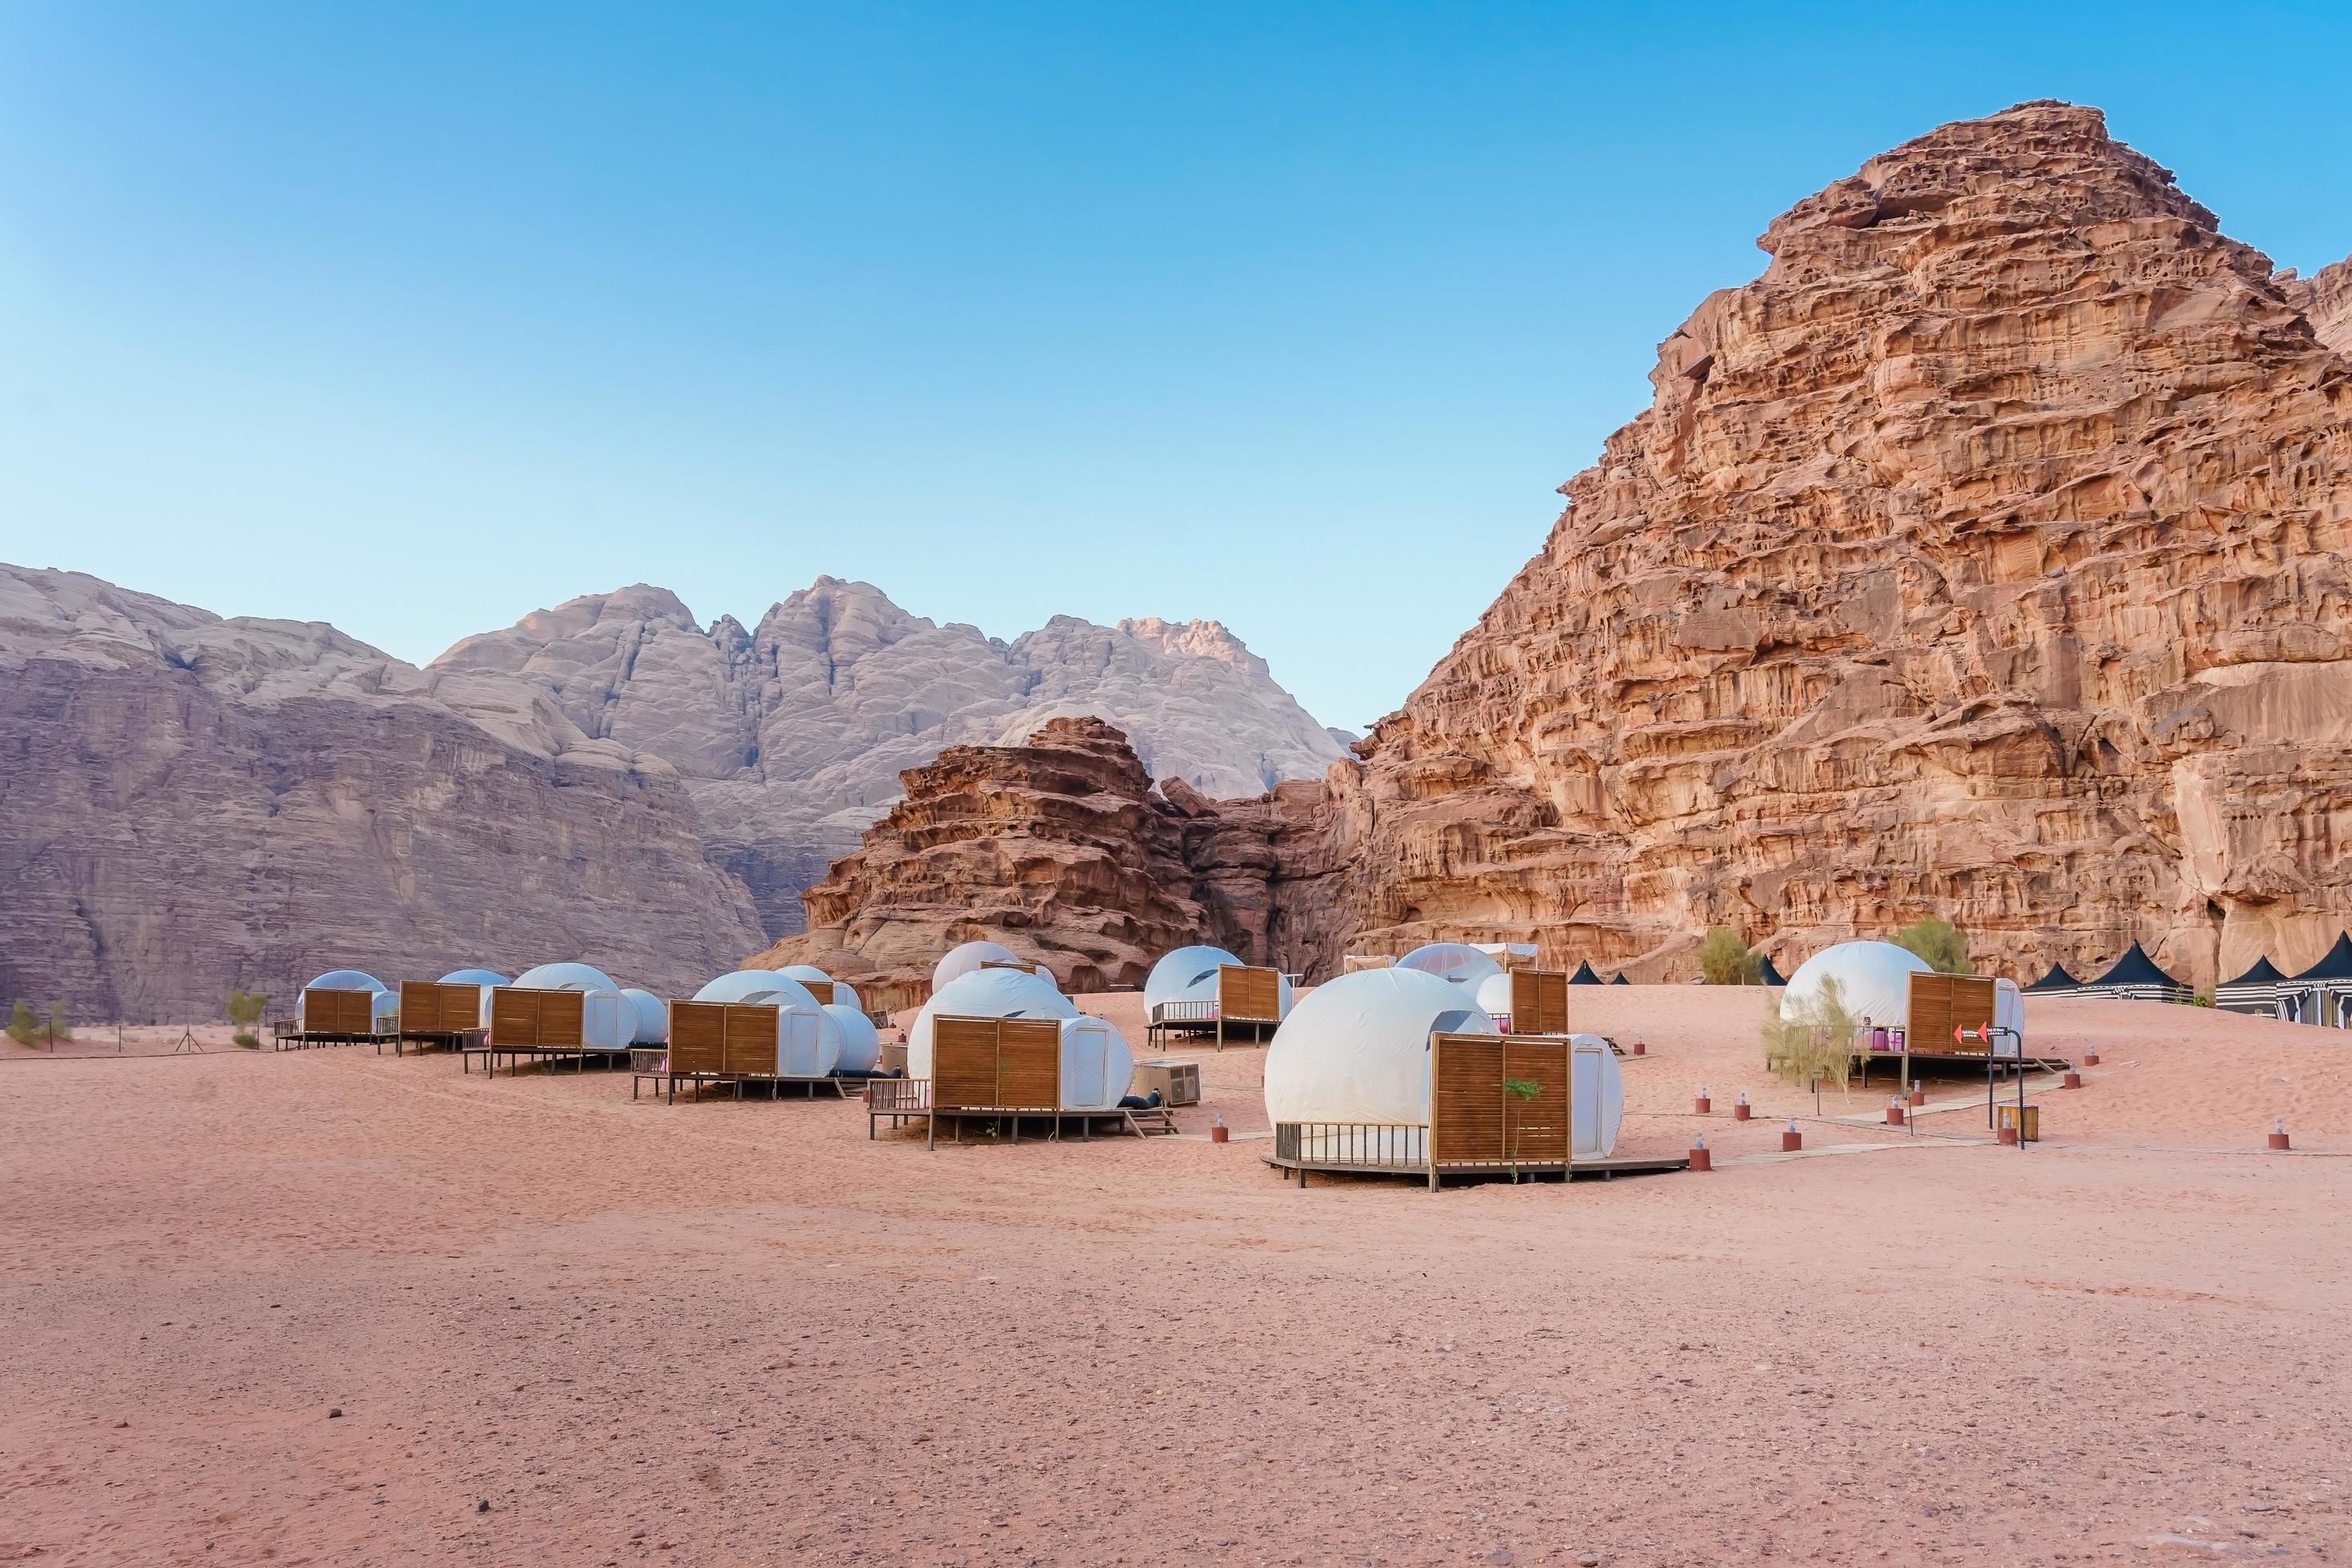 Camping along the rocks in Petra, Wadi Rum, Jordan photo